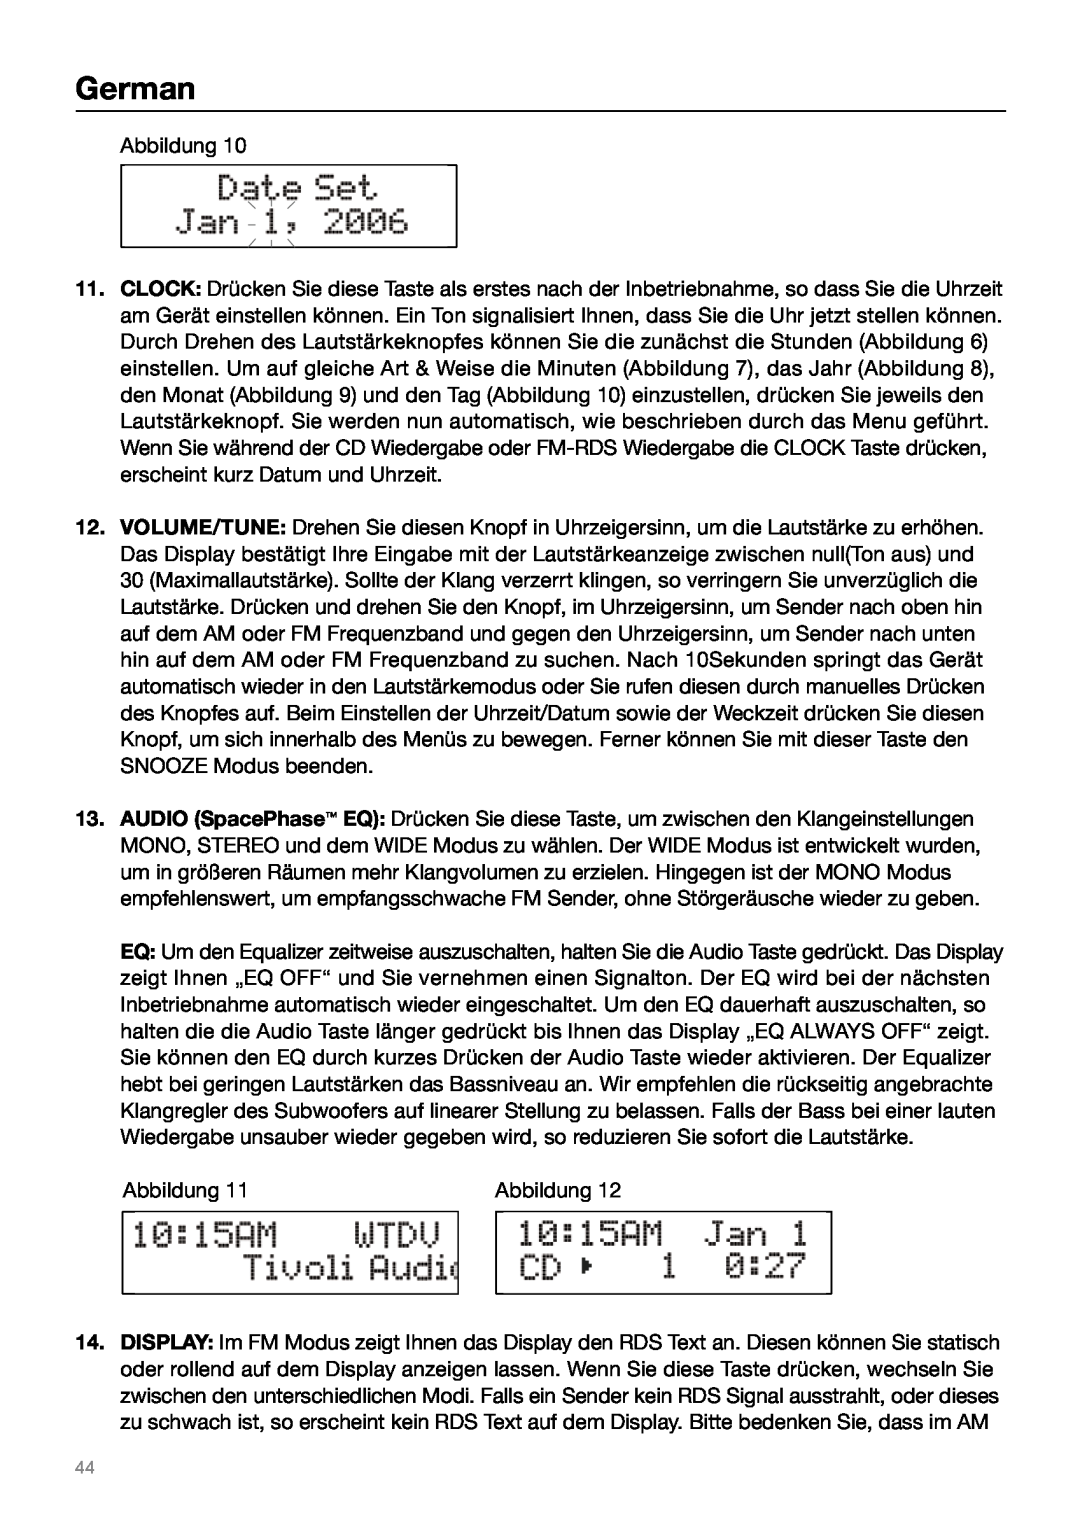 Tivoli Audio MUSIC SYSTEM owner manual German, Abbildung 